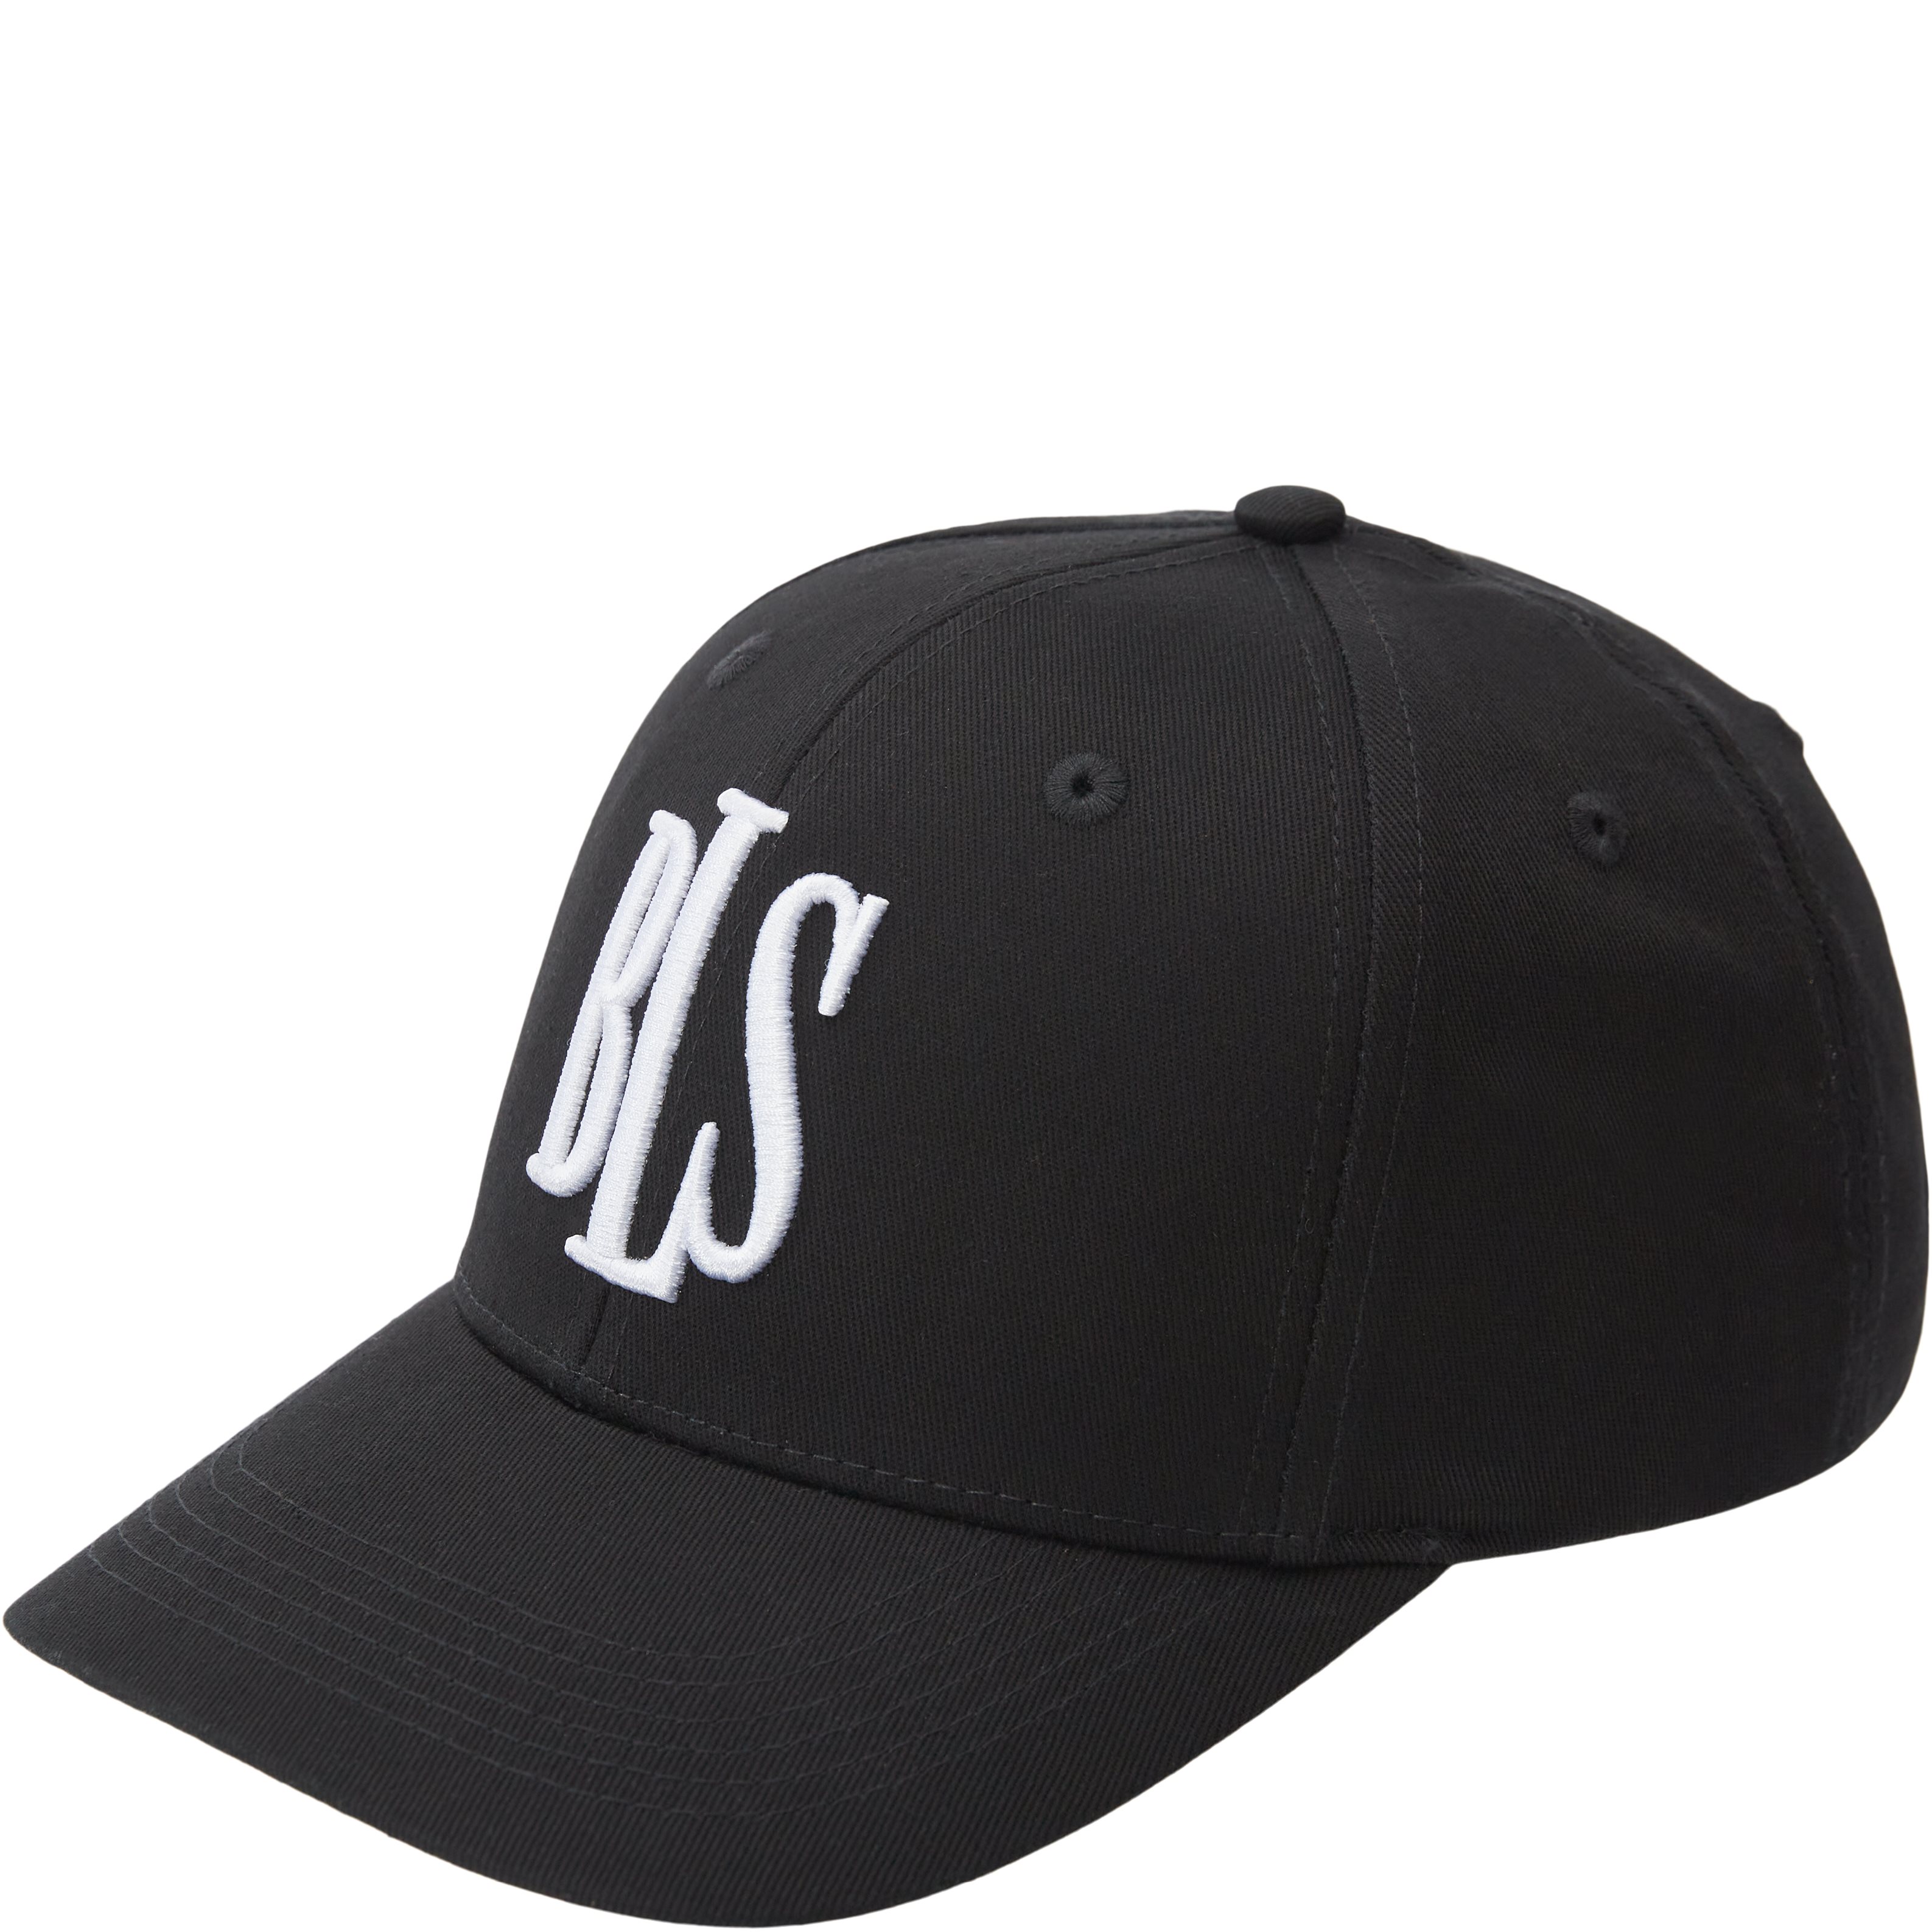 Classic baseball cap black - Huer - Regular fit - Sort